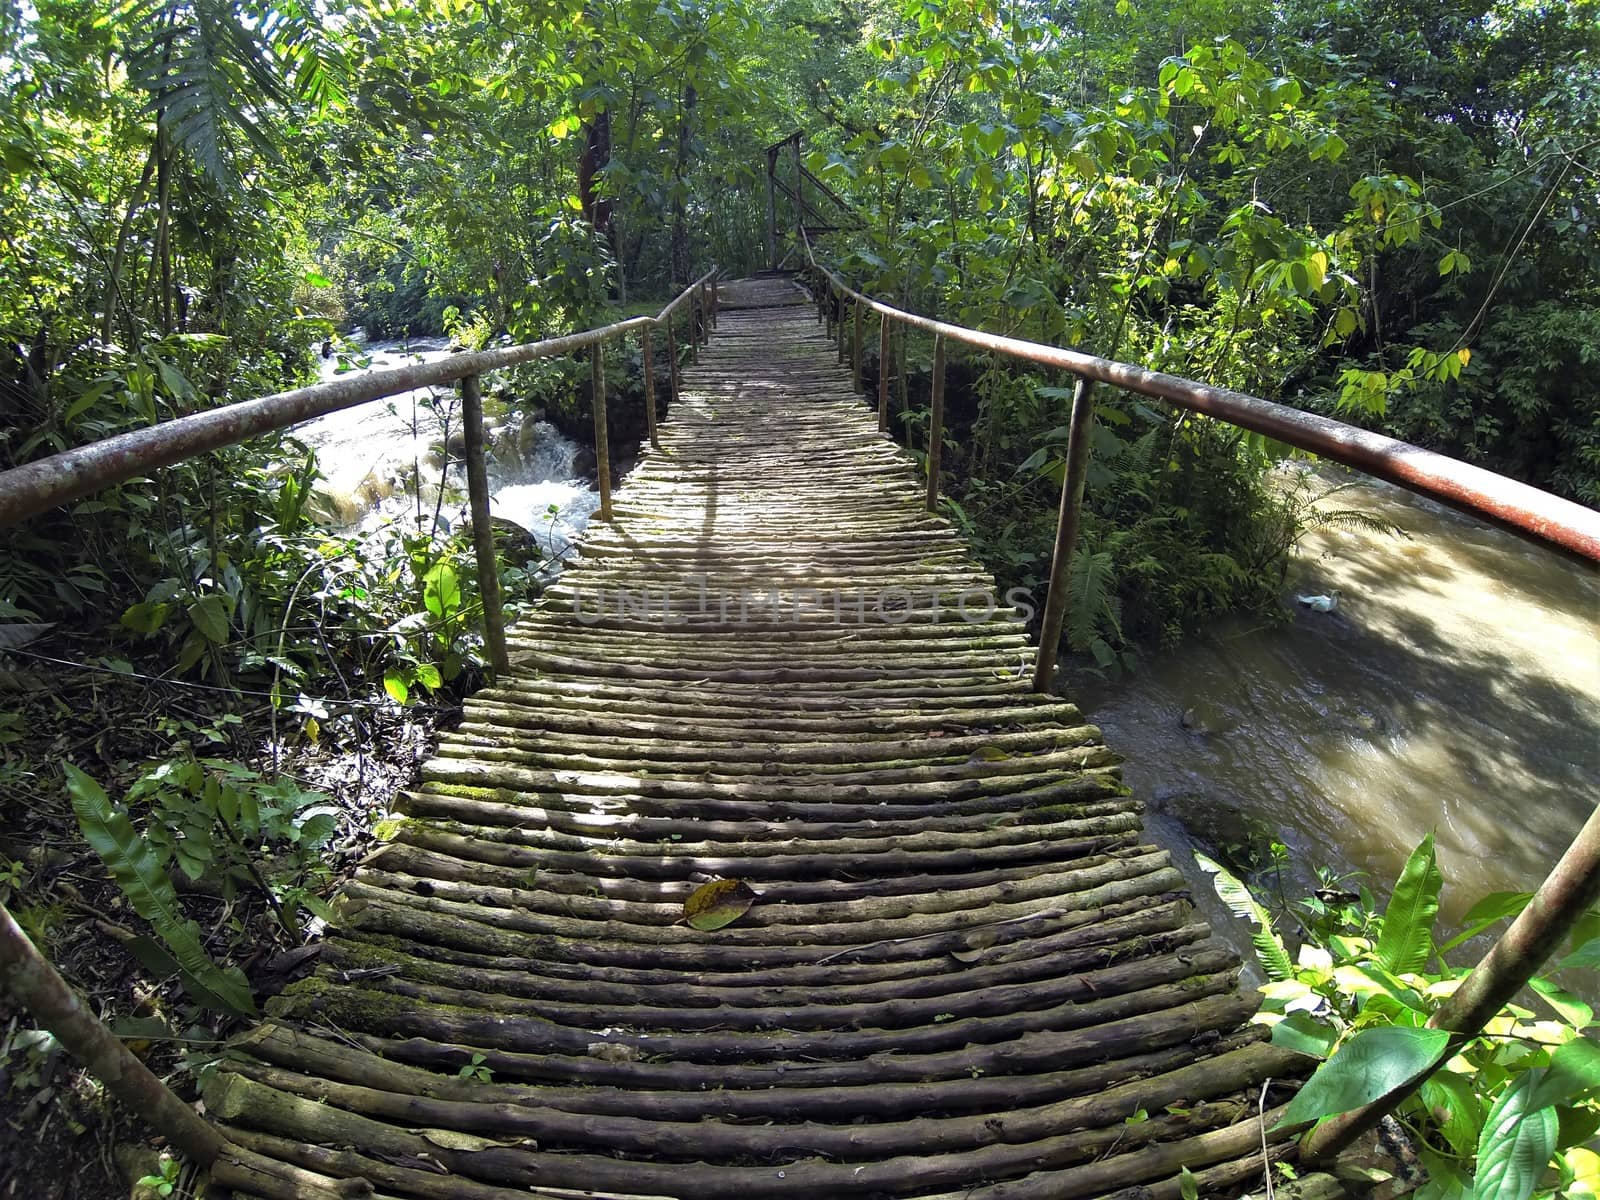 wood bridge across jungle river or stream in central america rainforest